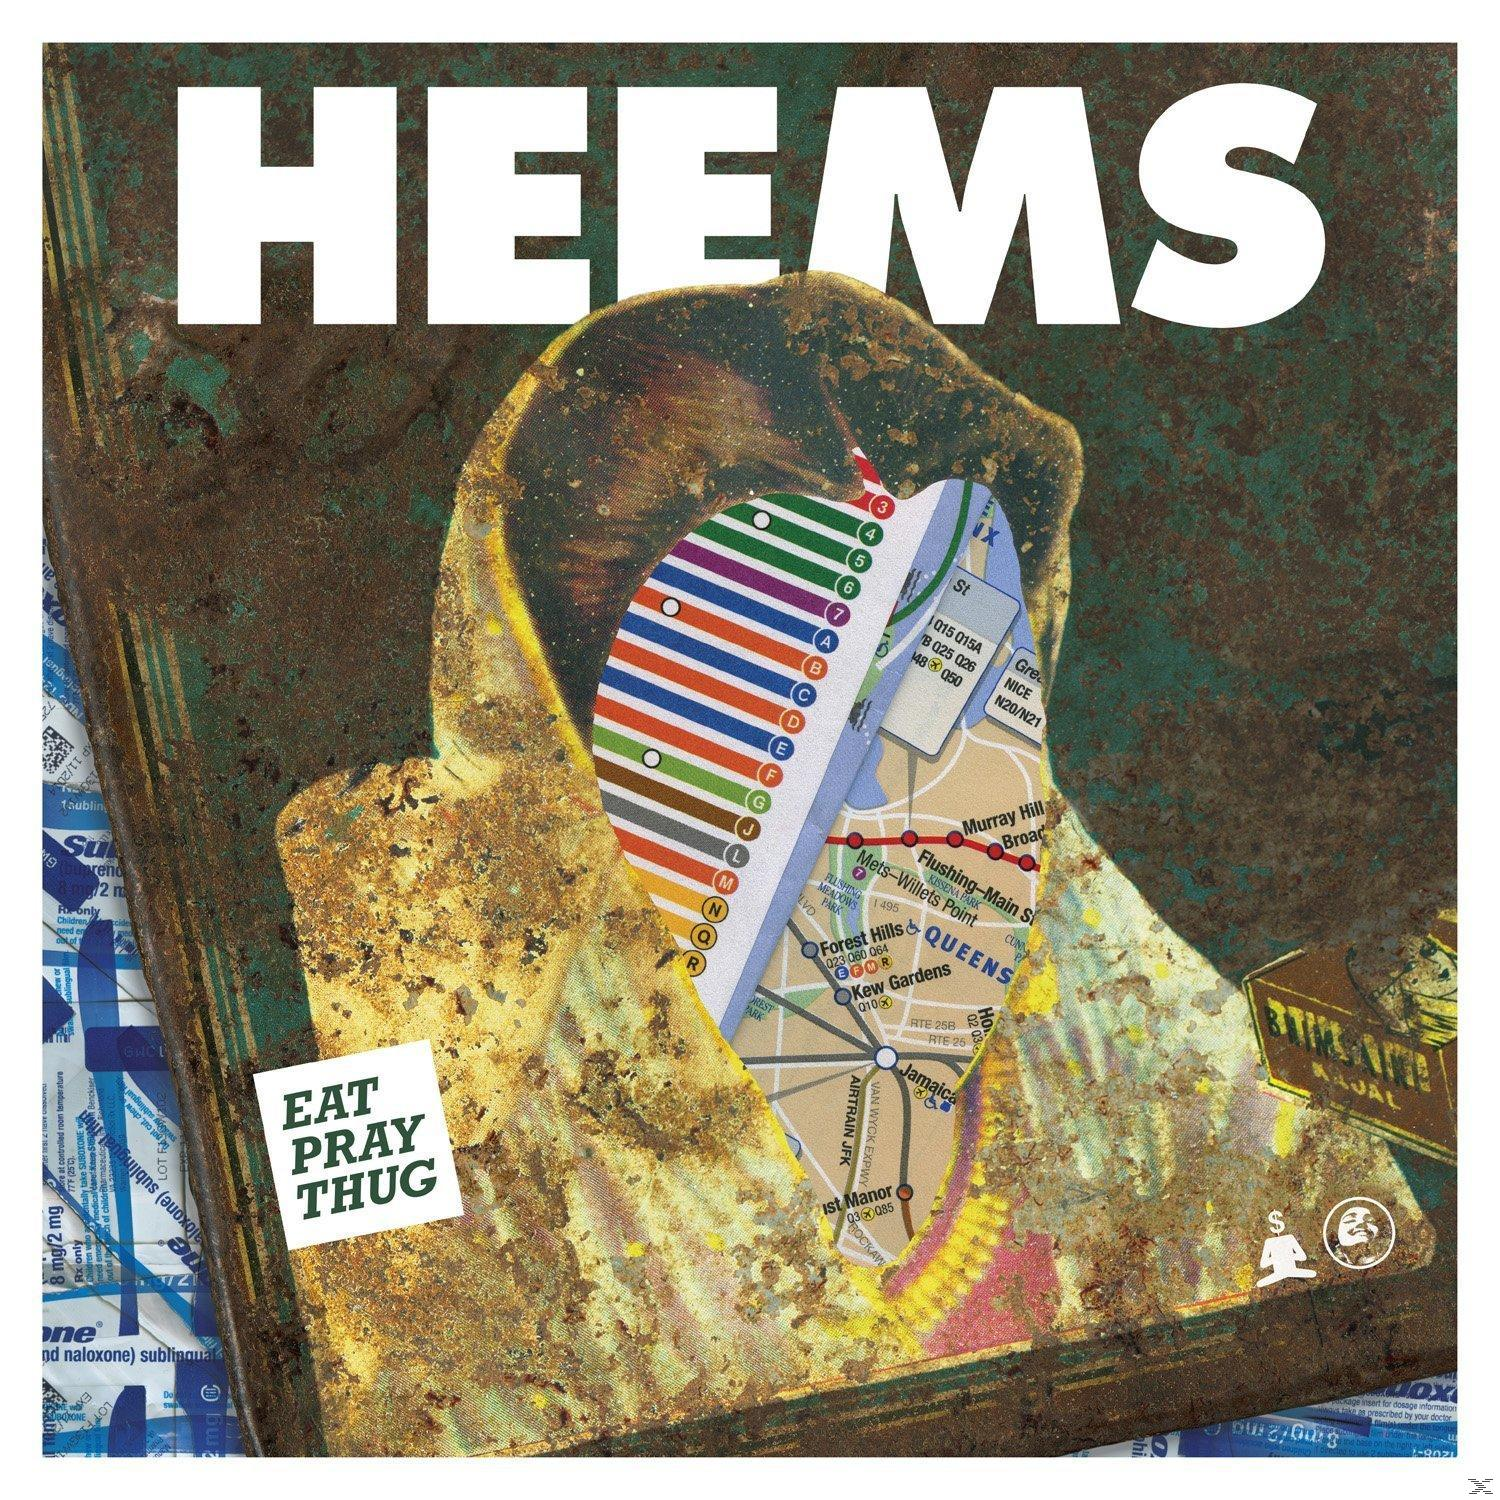 Thug - Heems Pray - Eat (CD)